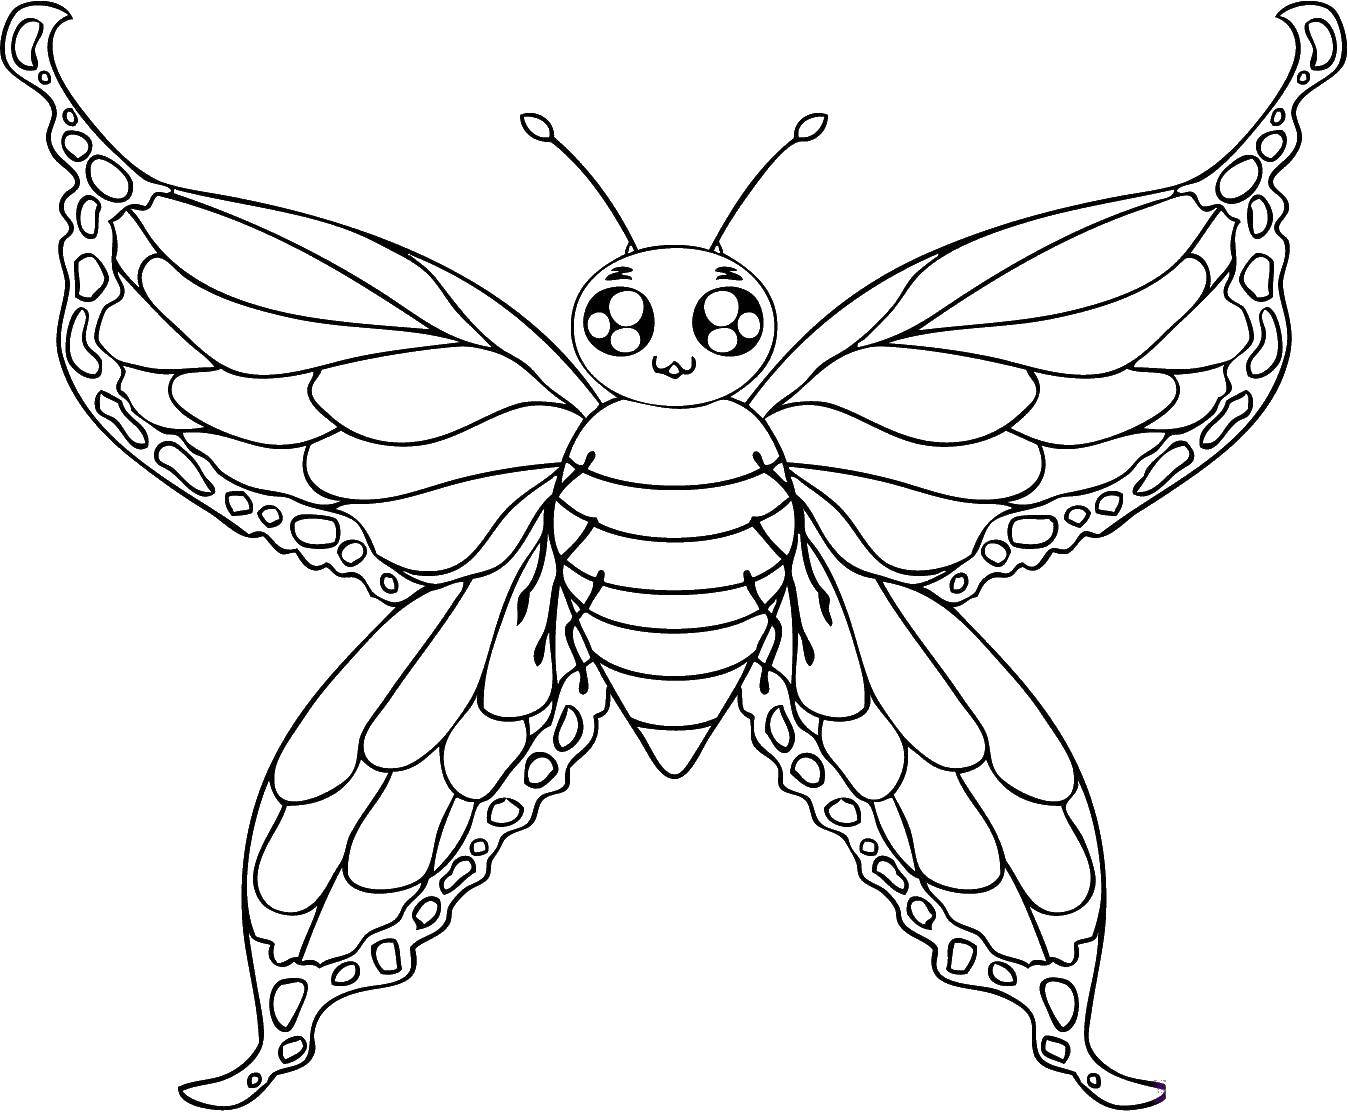 Название: Раскраска Бабочка и глазки. Категория: Бабочка. Теги: бабочка, глазки, крылья.